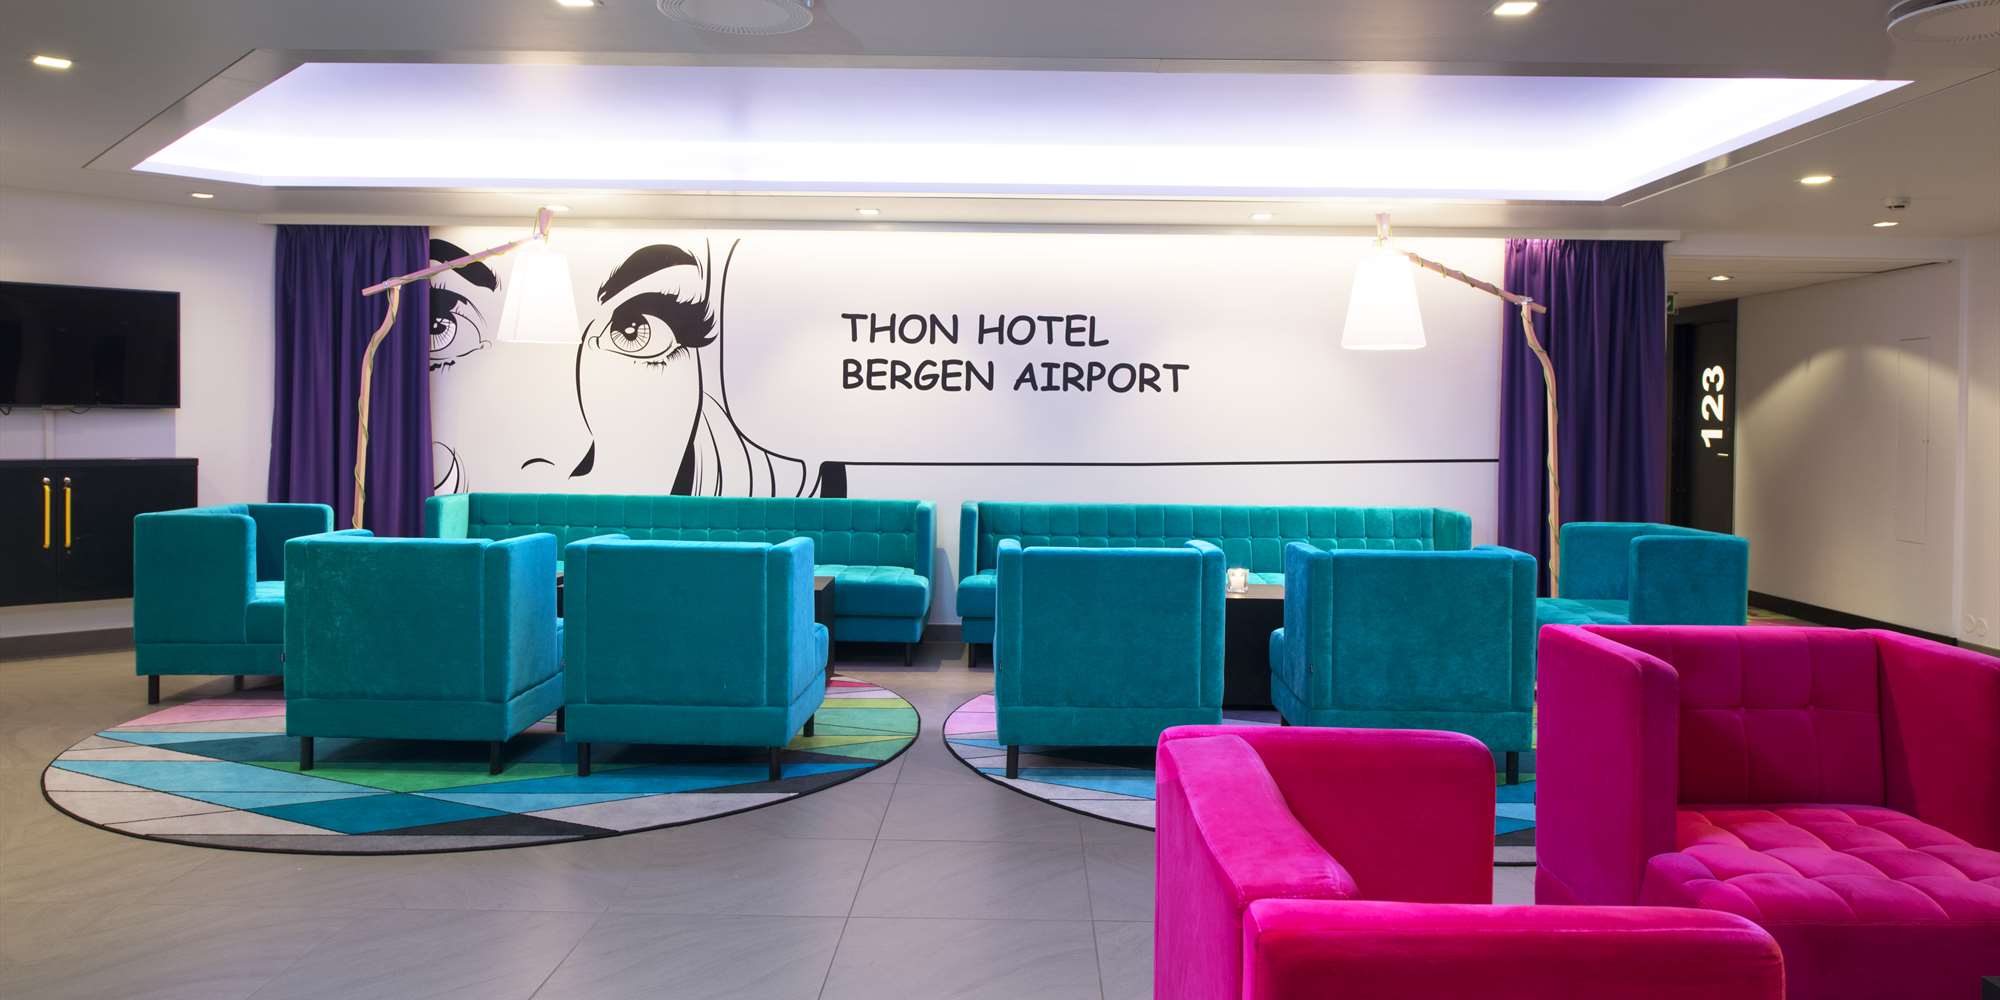 Thon Hotel Bergen Airport - Lobby